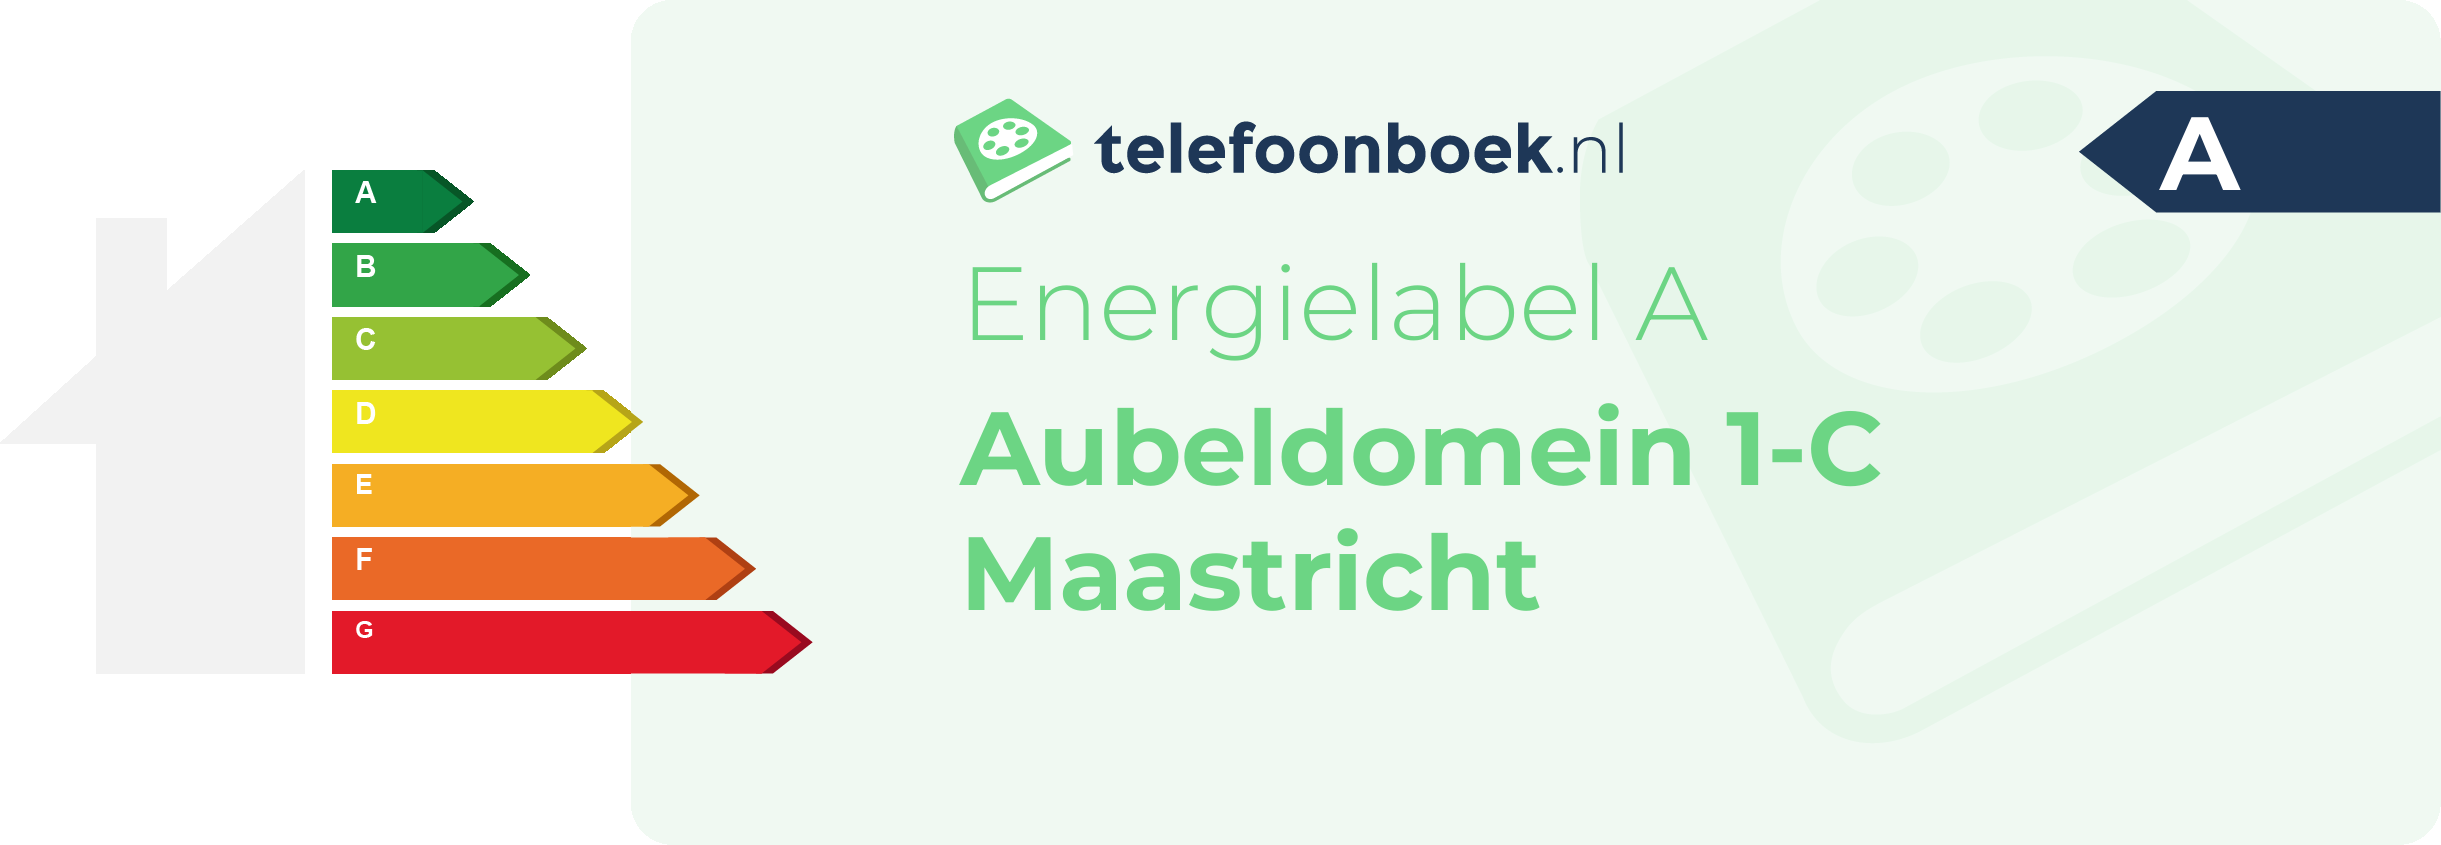 Energielabel Aubeldomein 1-C Maastricht